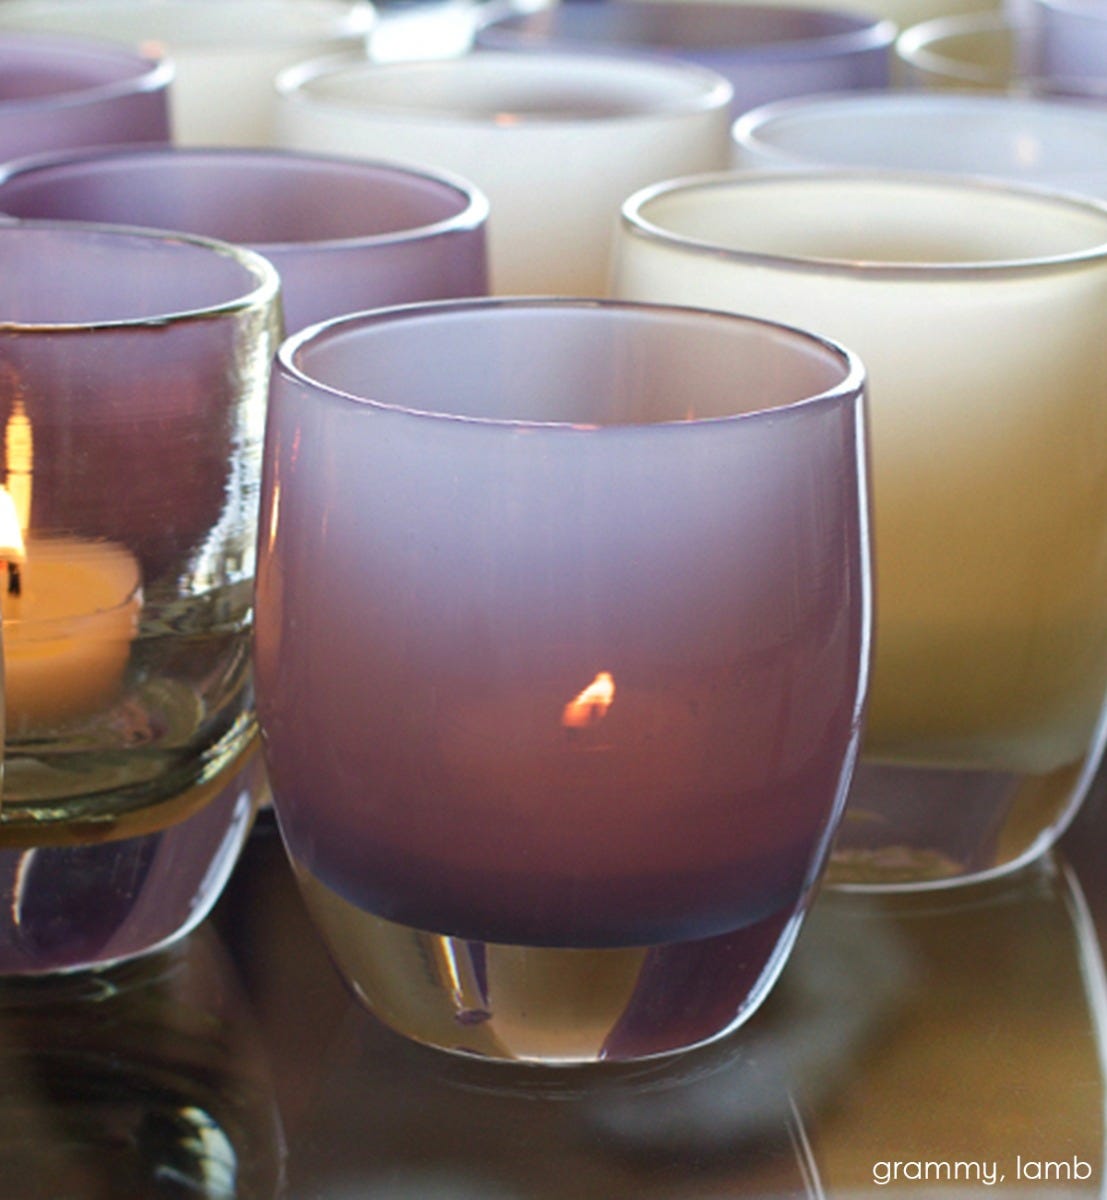 hand-blown soft purple glass votive candle holder